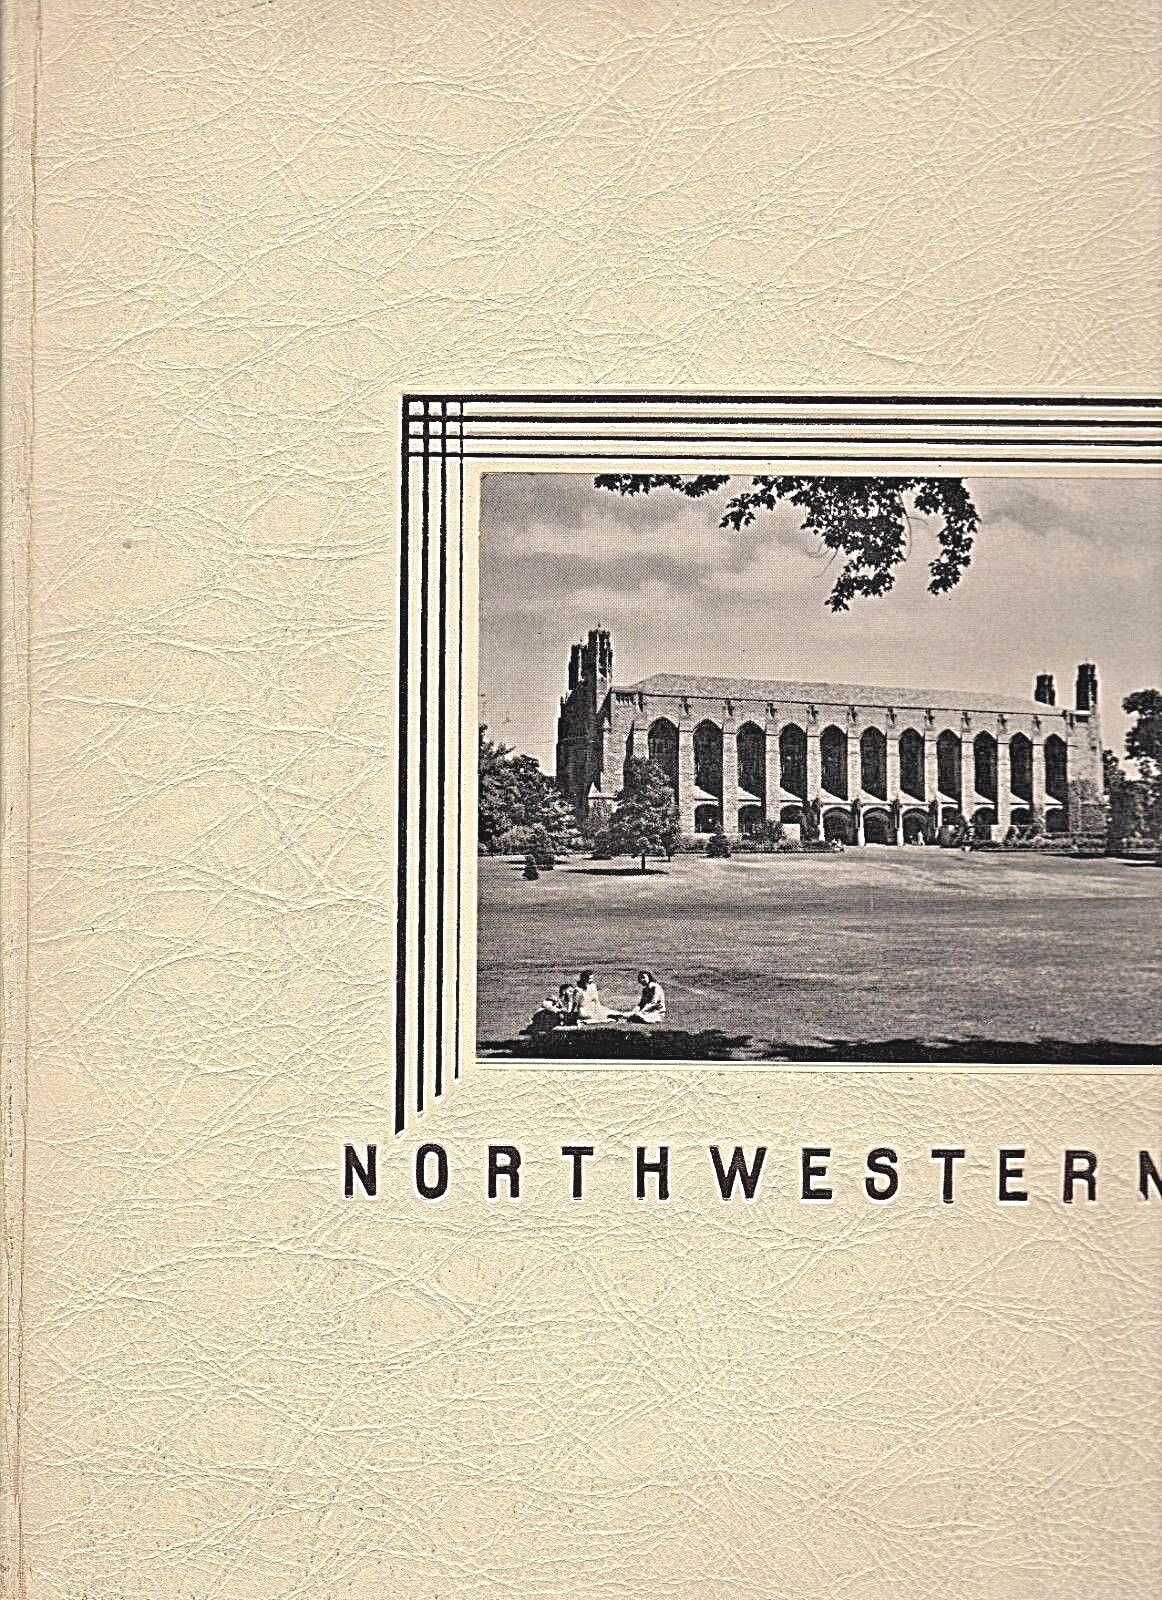 Original 1946 Northwestern University Yearbook-Evanston Illinois-The Syllabus